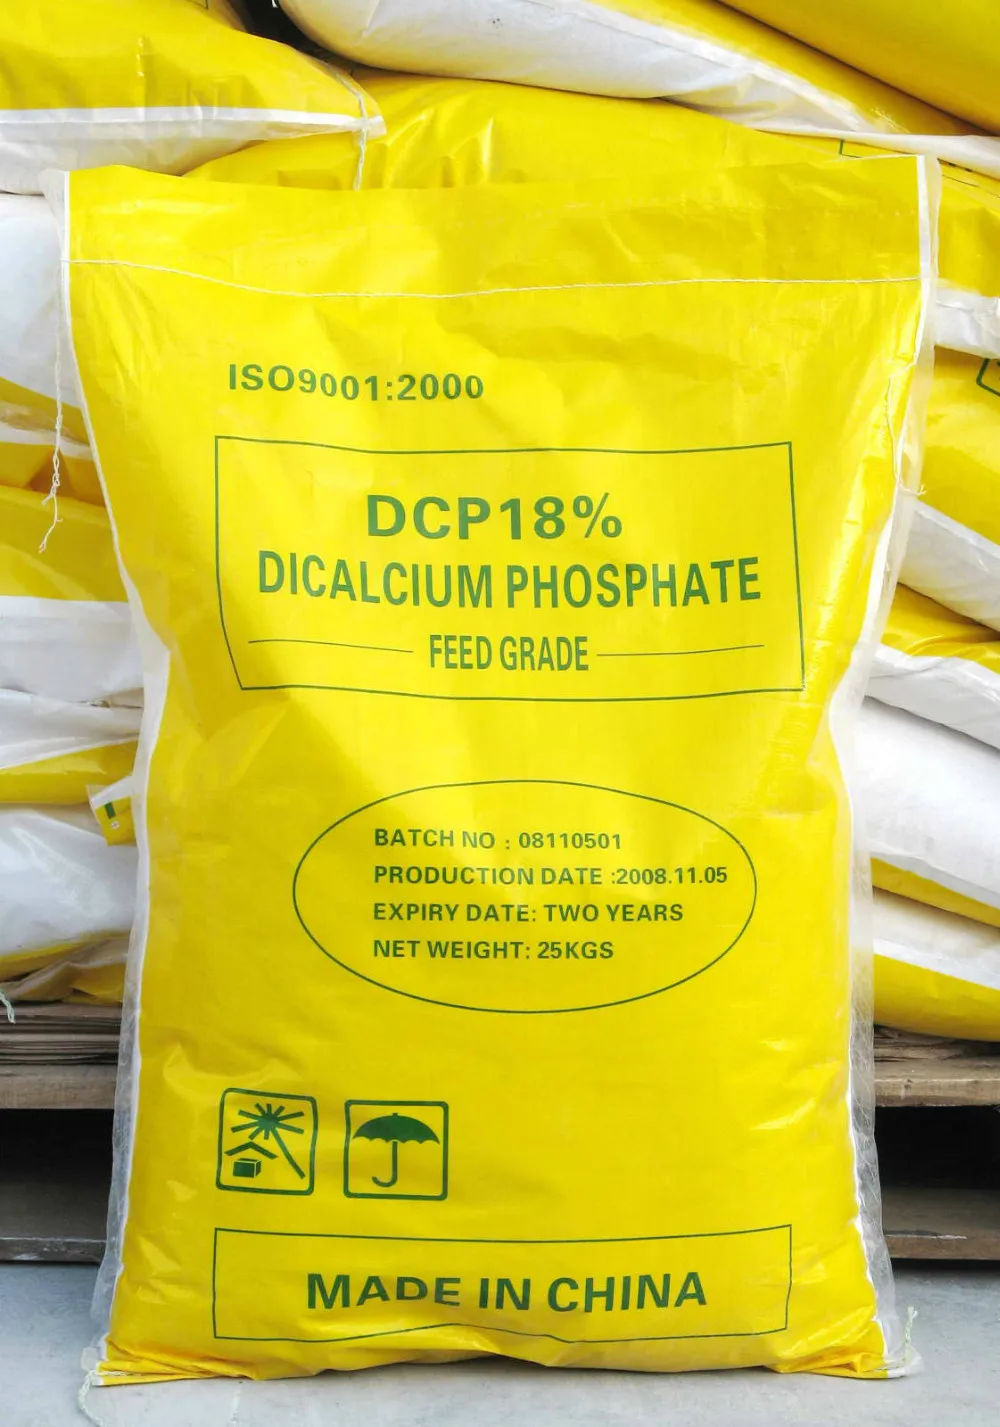 Pacifische eilanden Snoep Verplaatsing On Sale Dcp 18% Feed Grade - Buy Dcp,Dcp Powder,Dicalcium Phosphate Product  on Alibaba.com